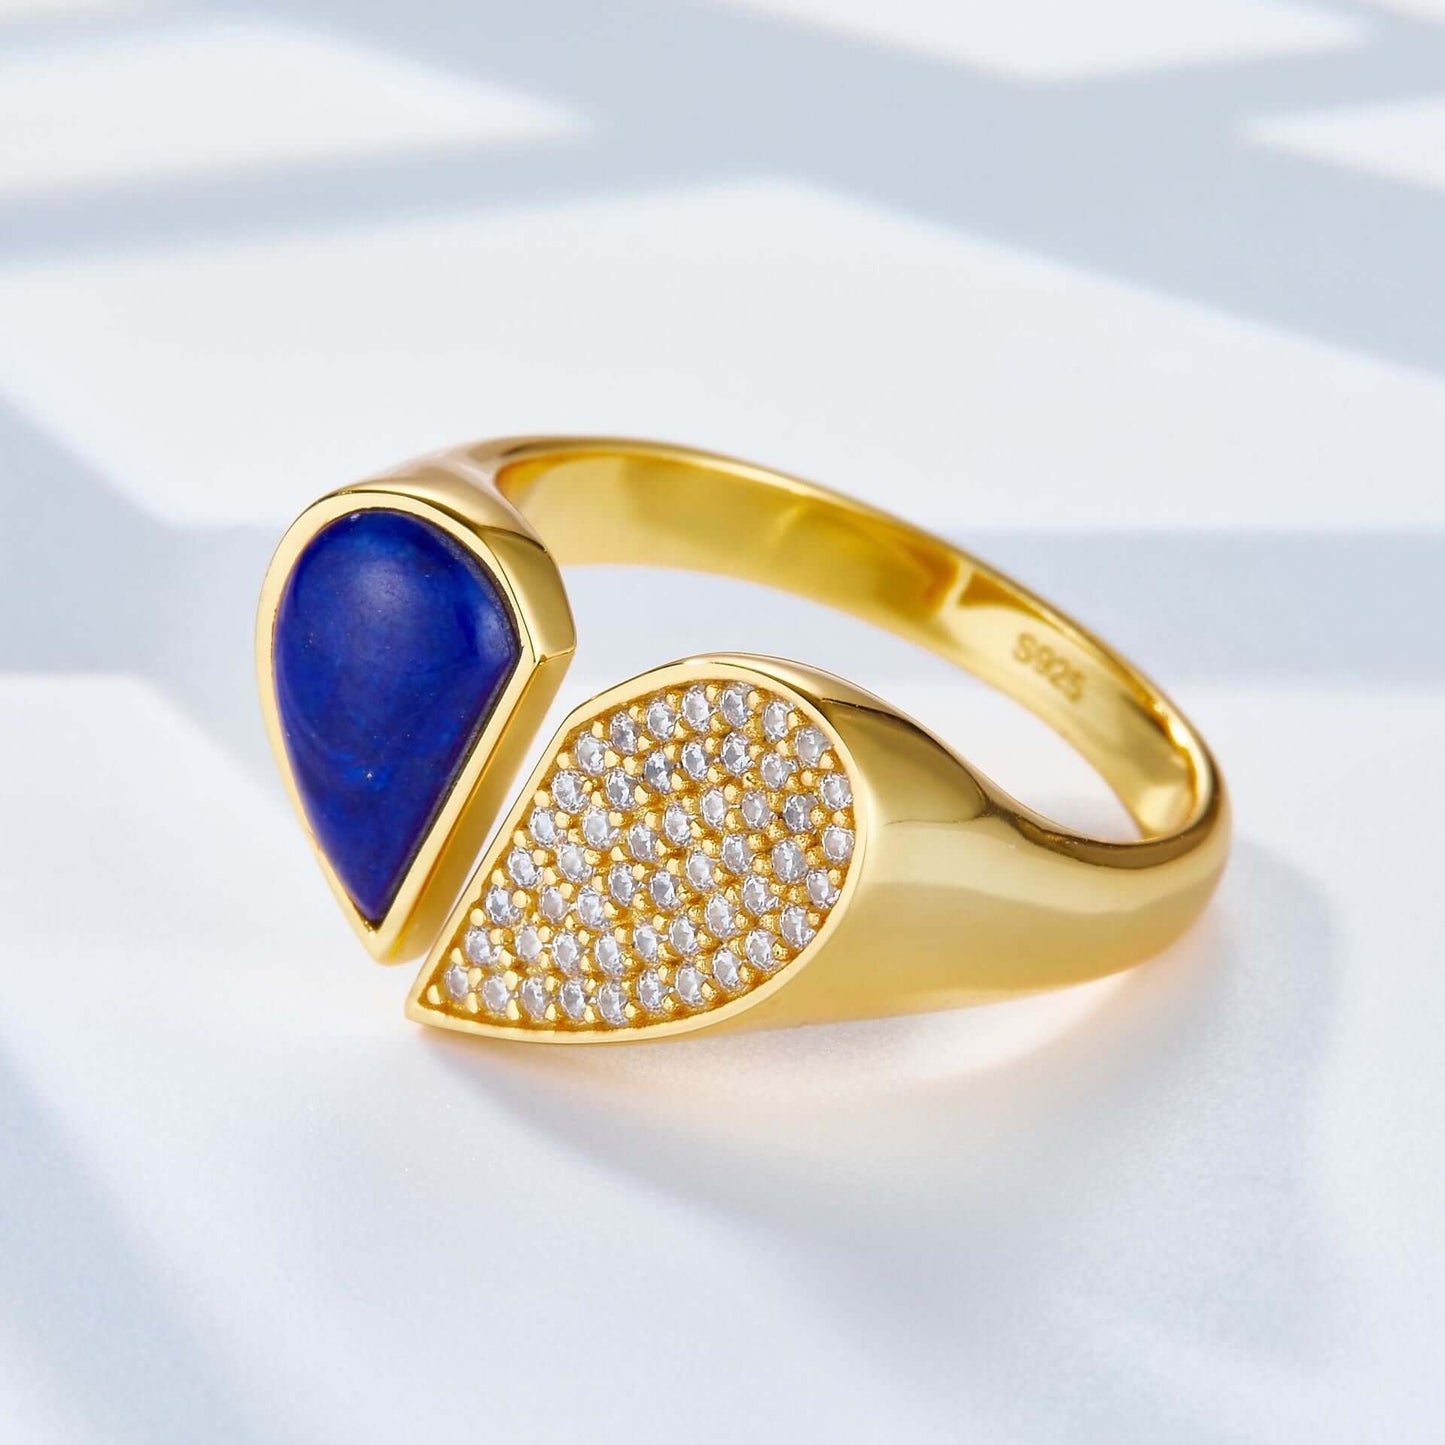 Lapis Lazuli Heart Ring